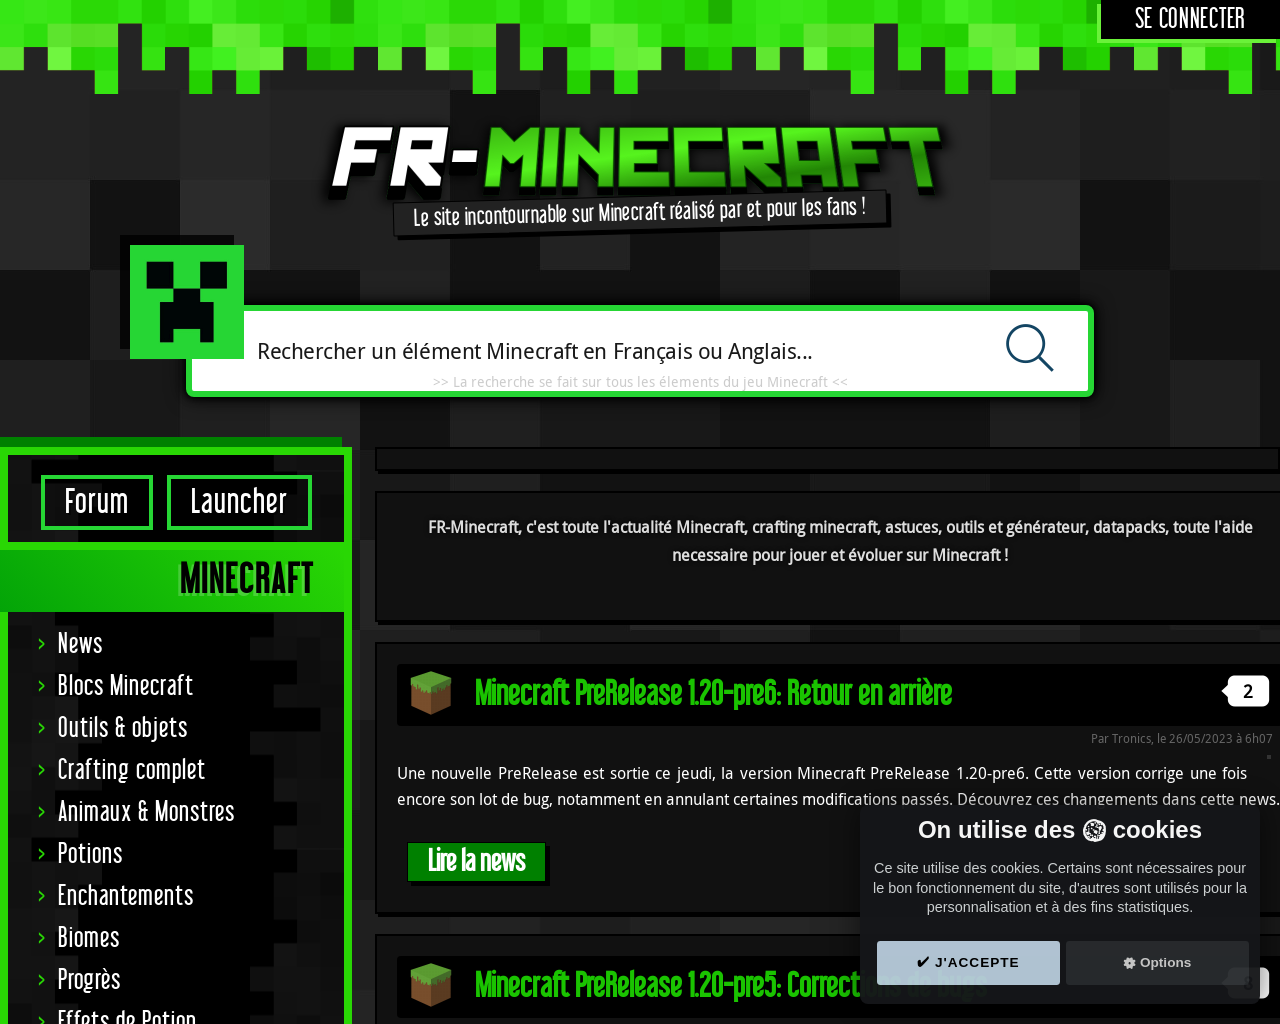 fr-minecraft.net